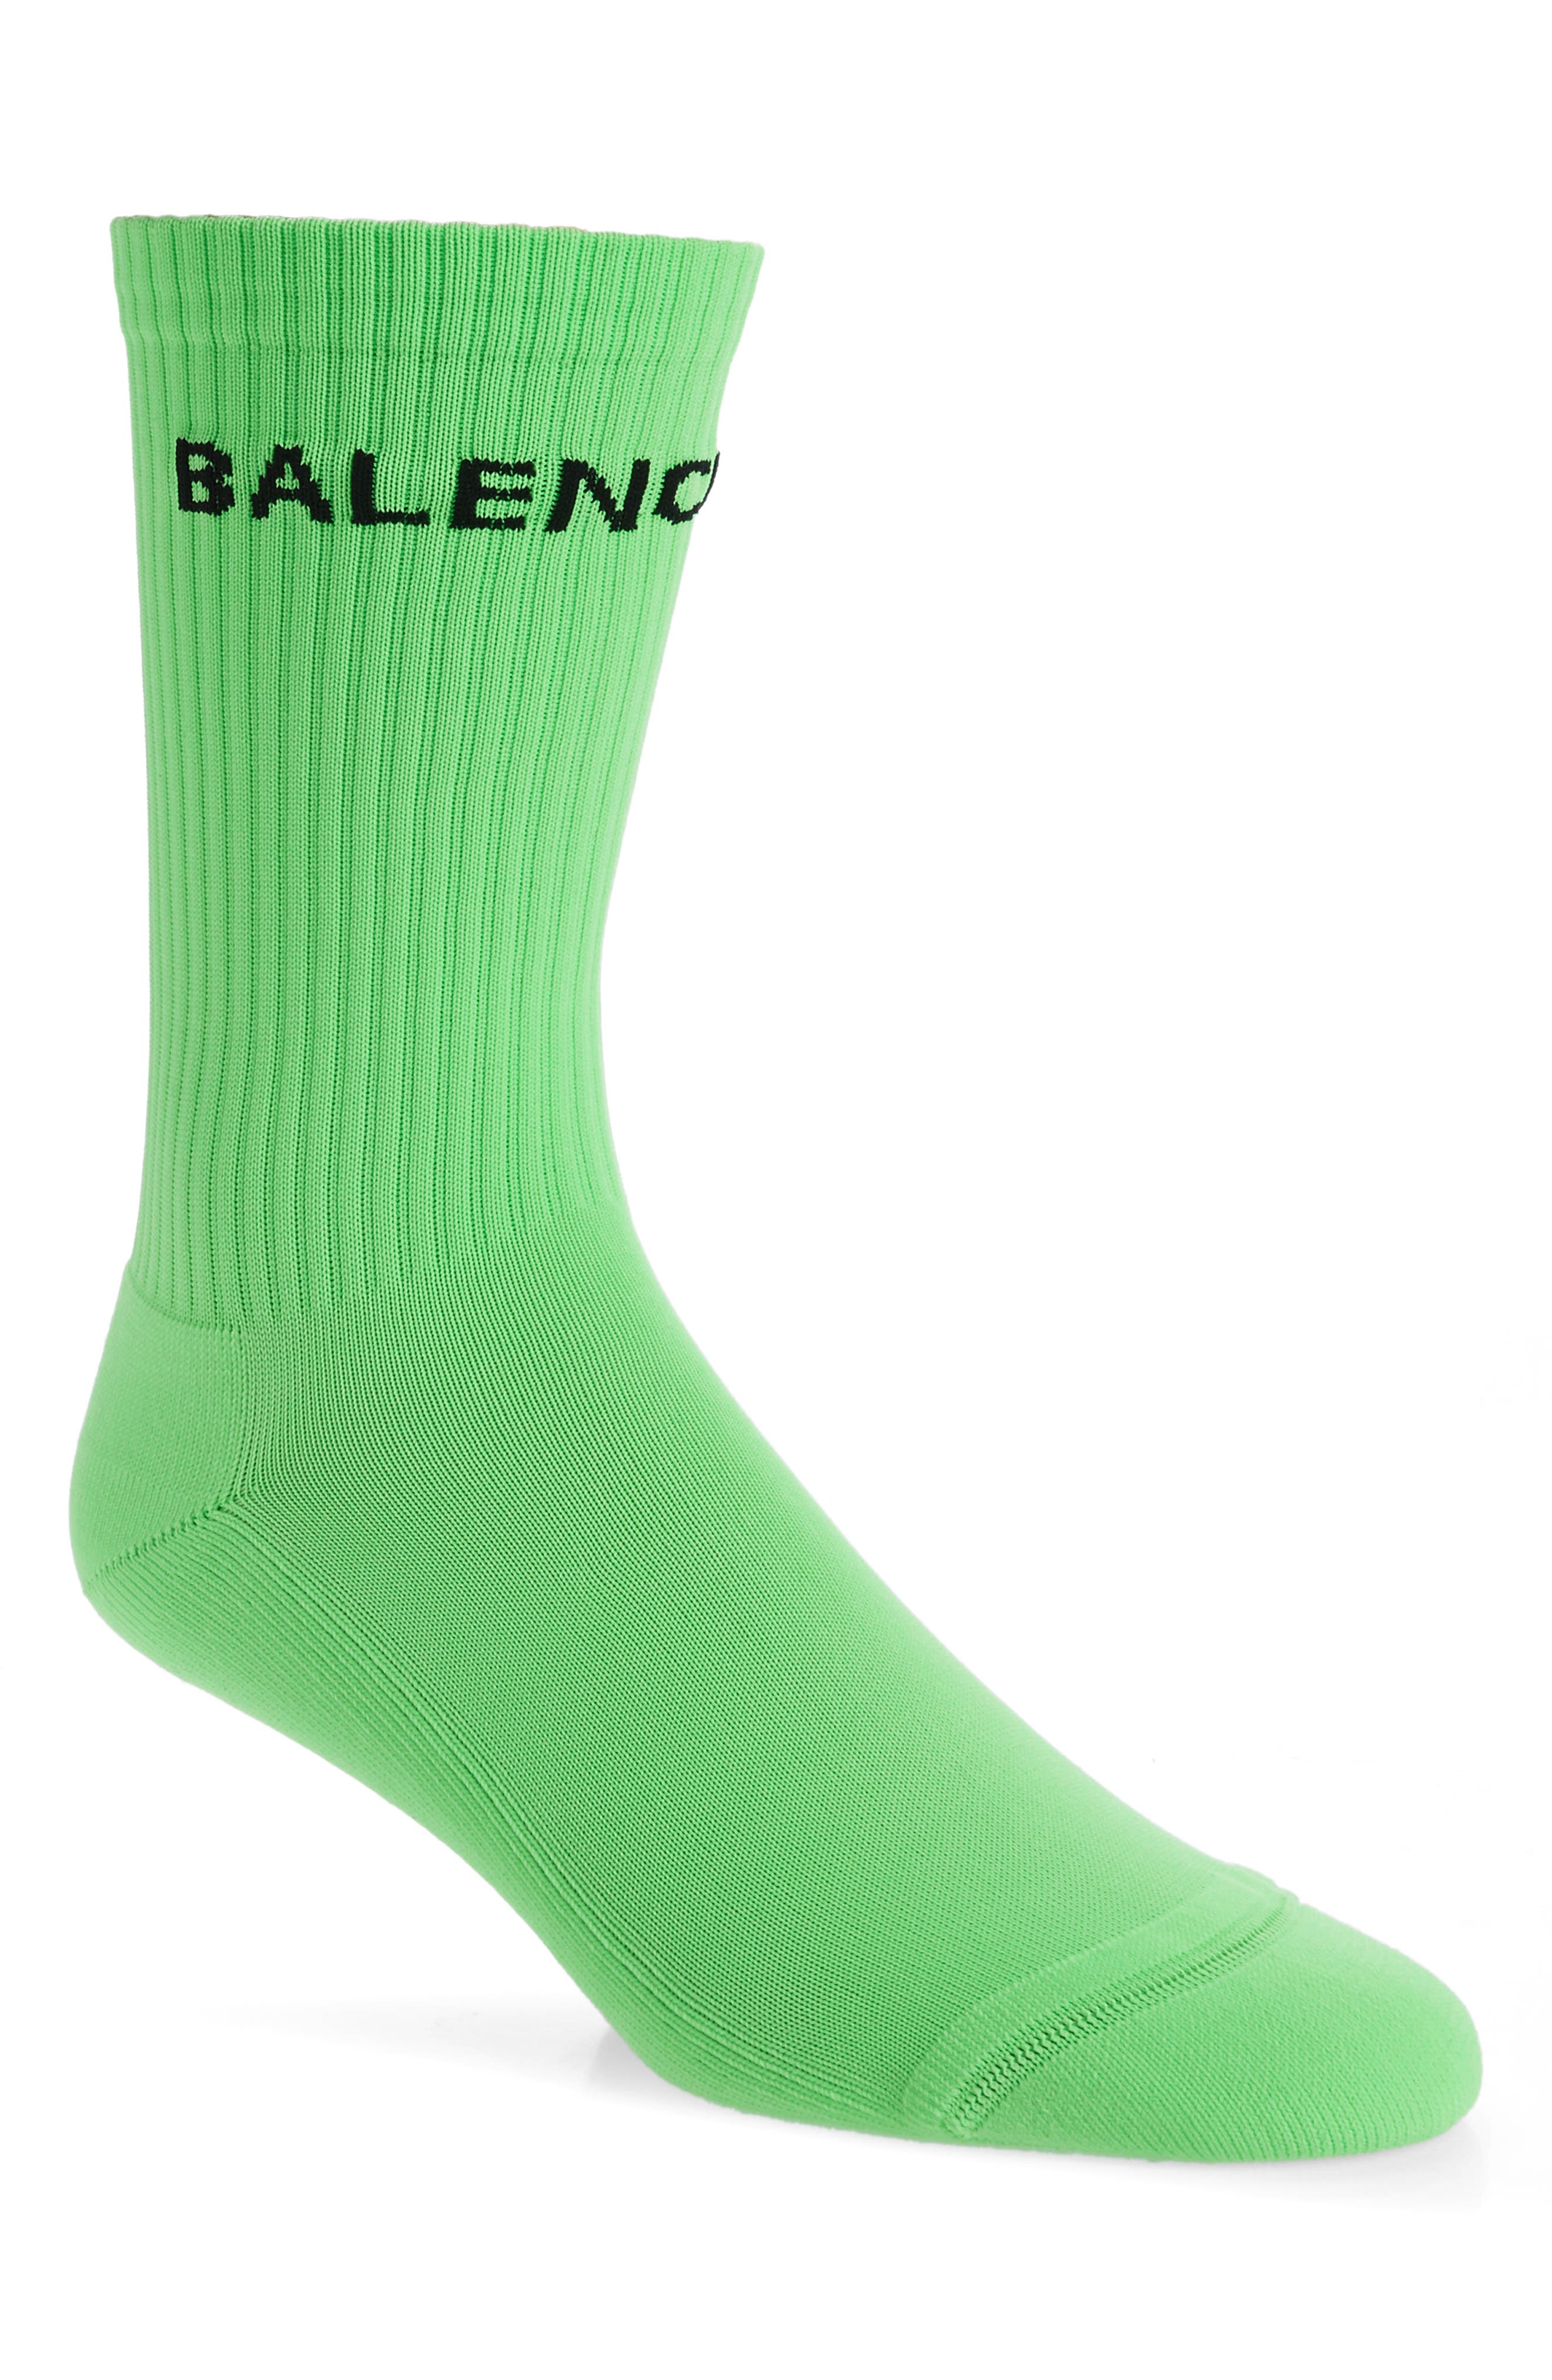 balenciaga boxers and the socks